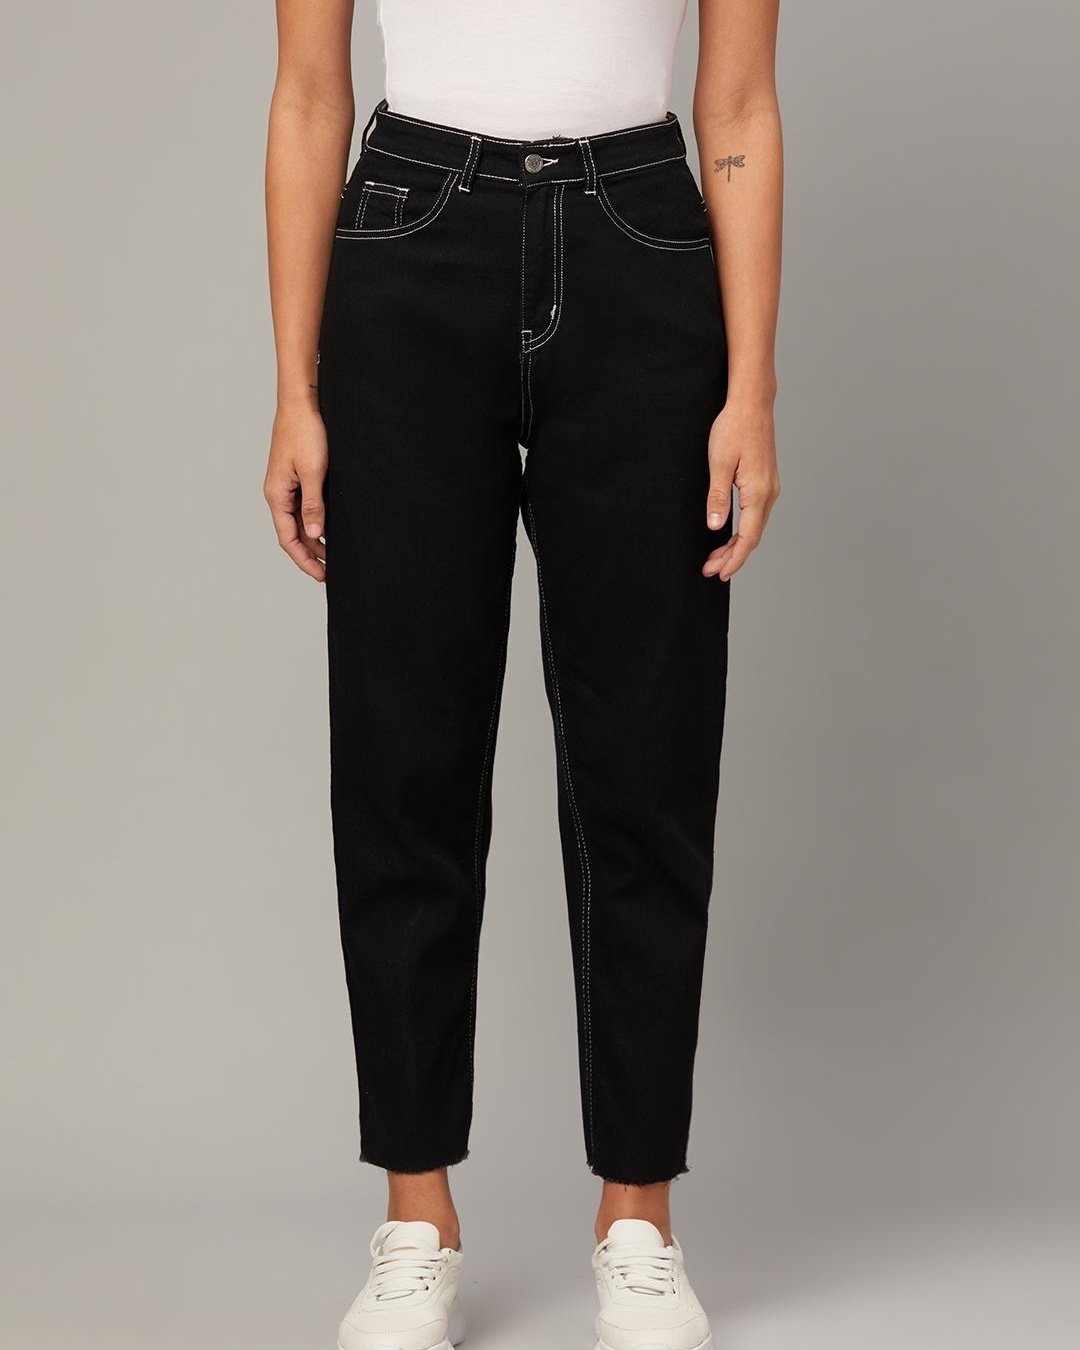 Buy Kotty Women's Black Jeans for Women Black Online at Bewakoof